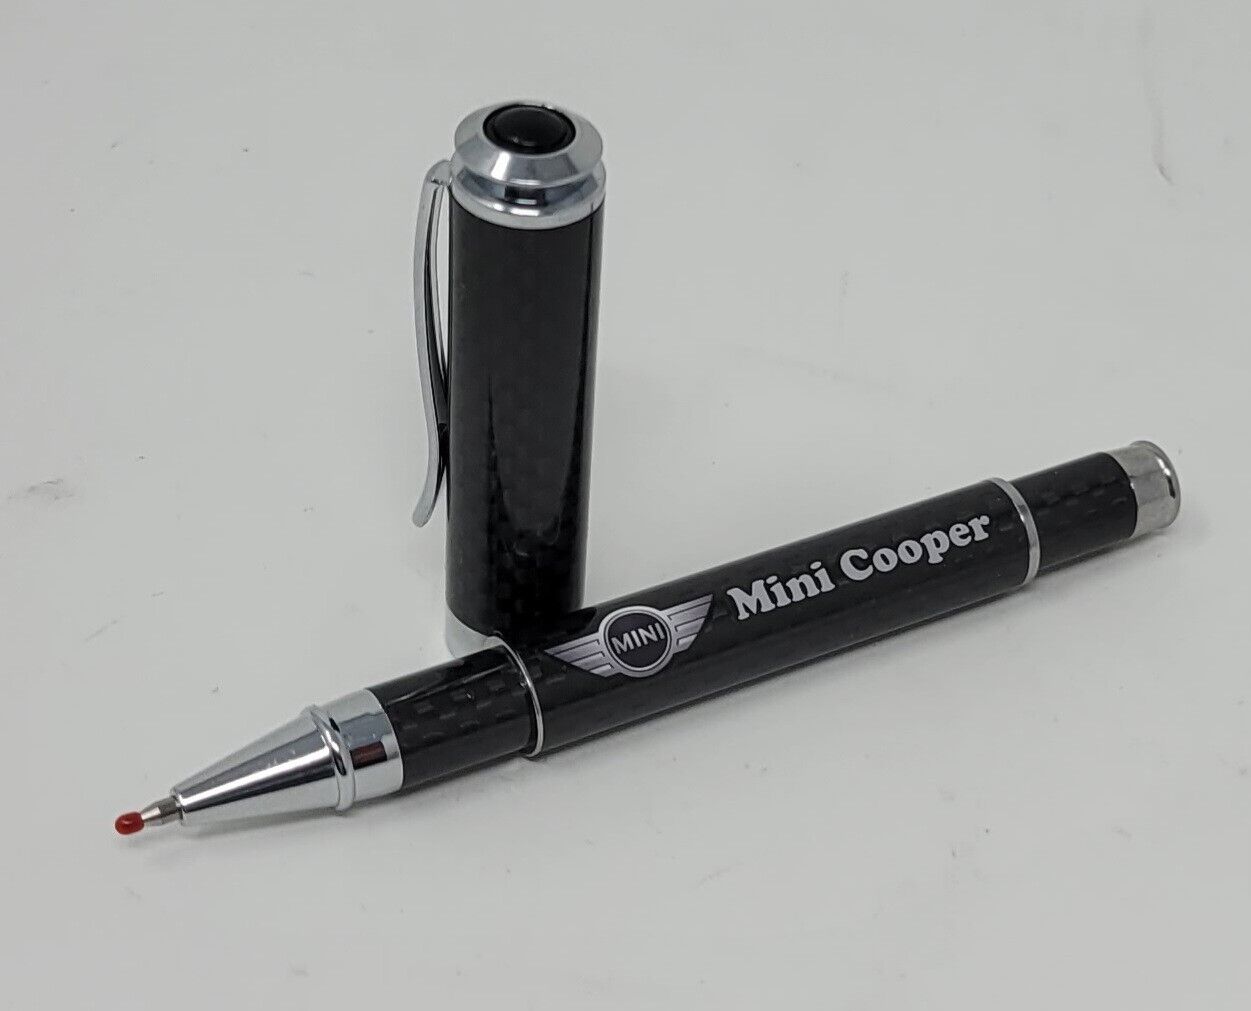 Mini Cooper Text and  Logo Carbon Fiber Ballpoint Pen - GREAT GIFT